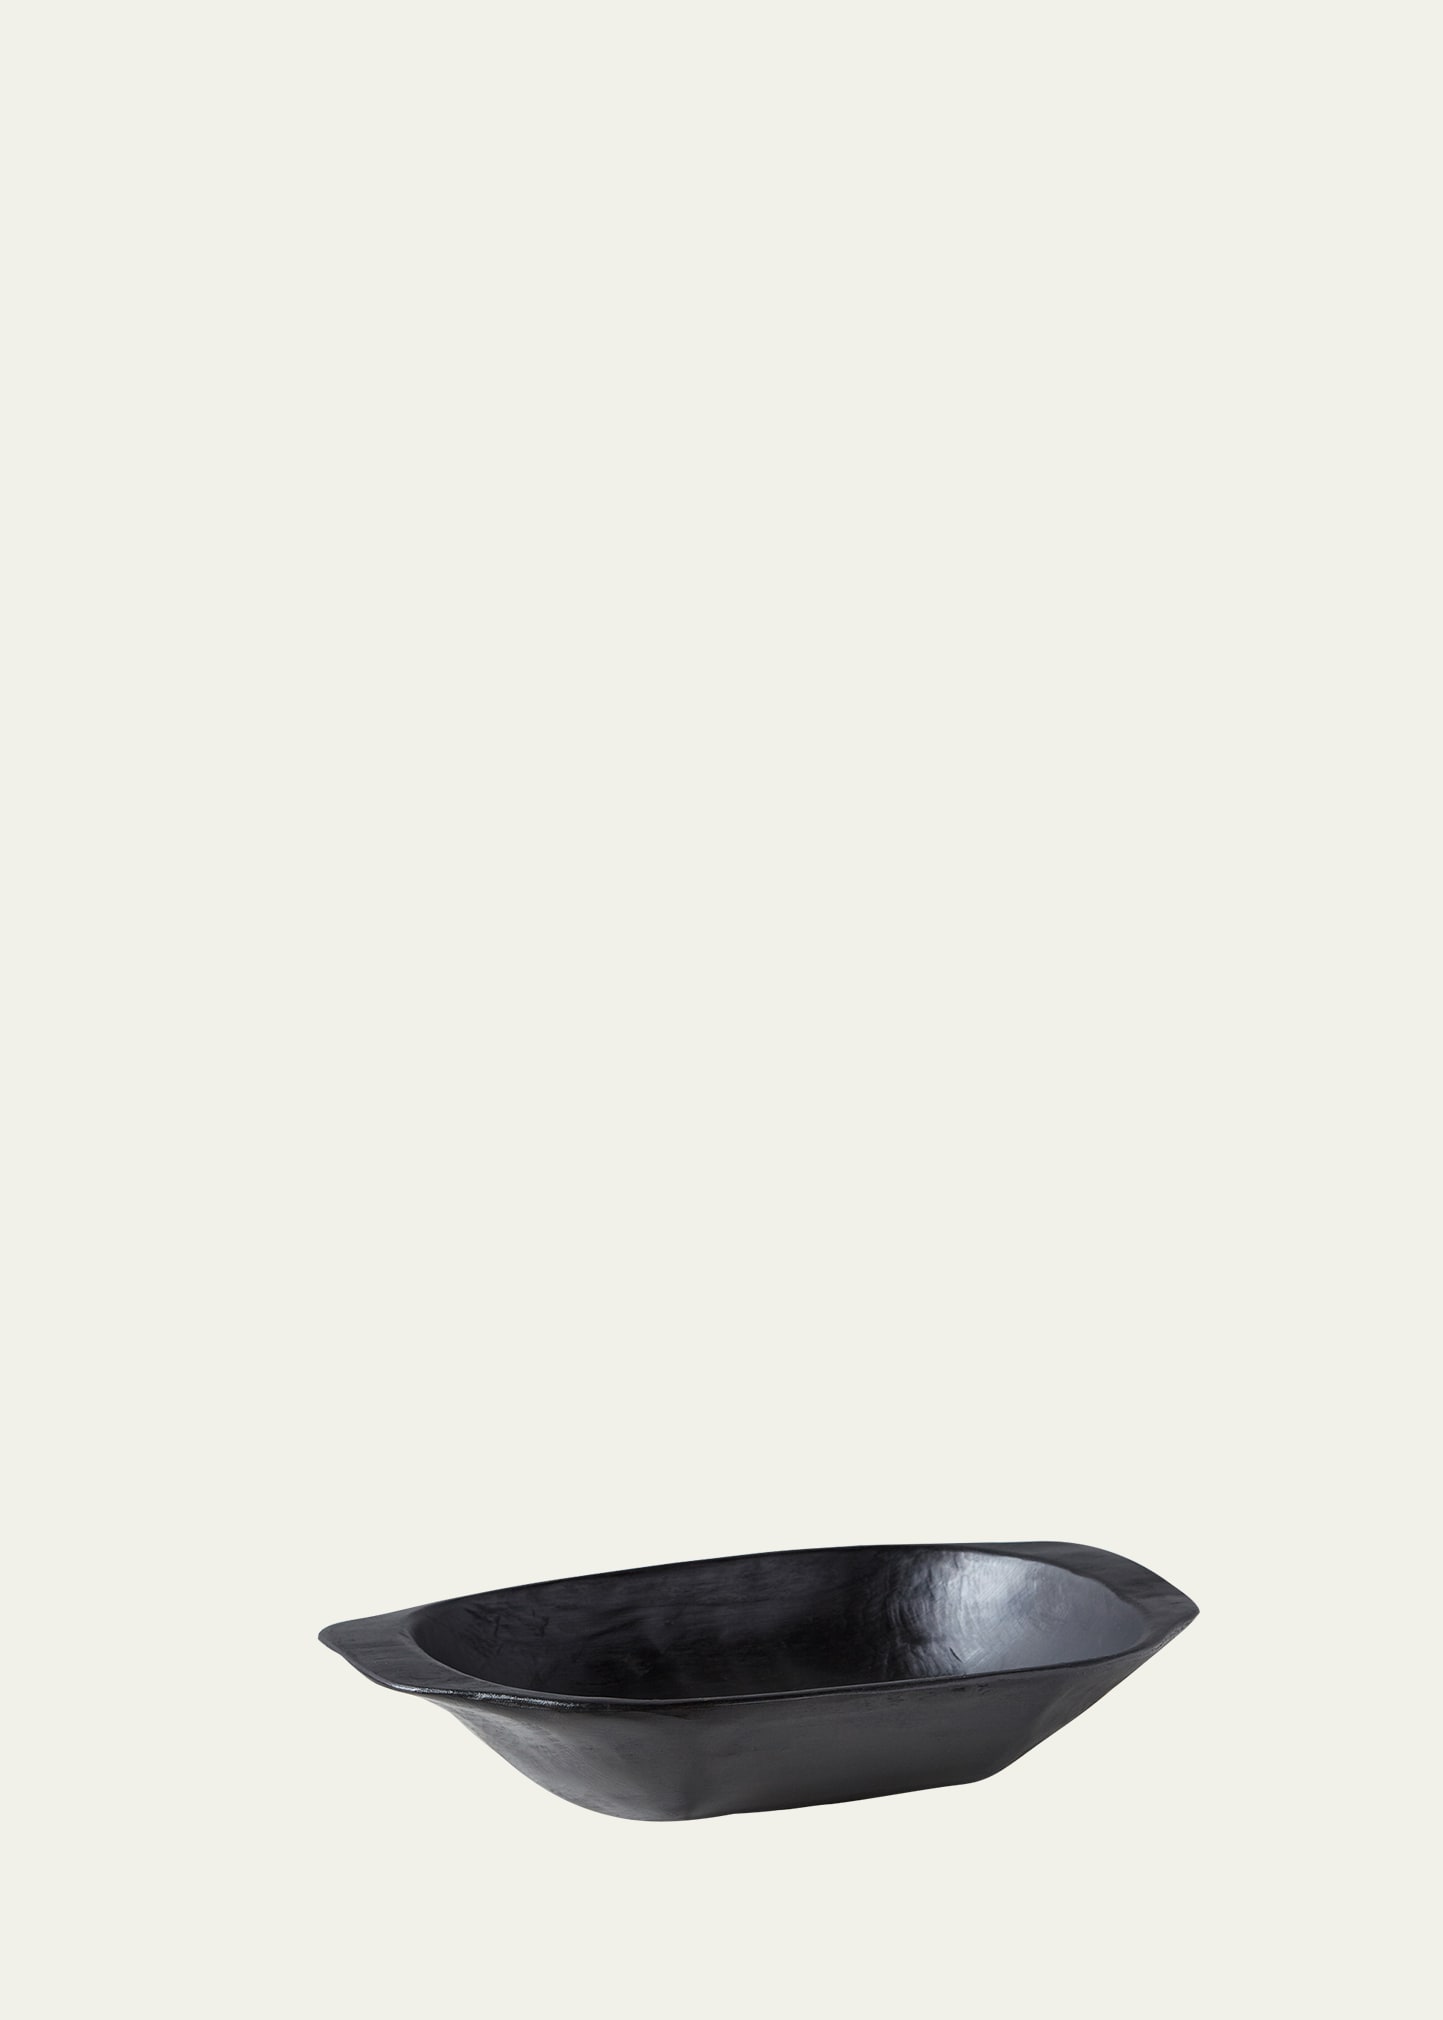 Etúhome Small Black Dough Bowl, 20"